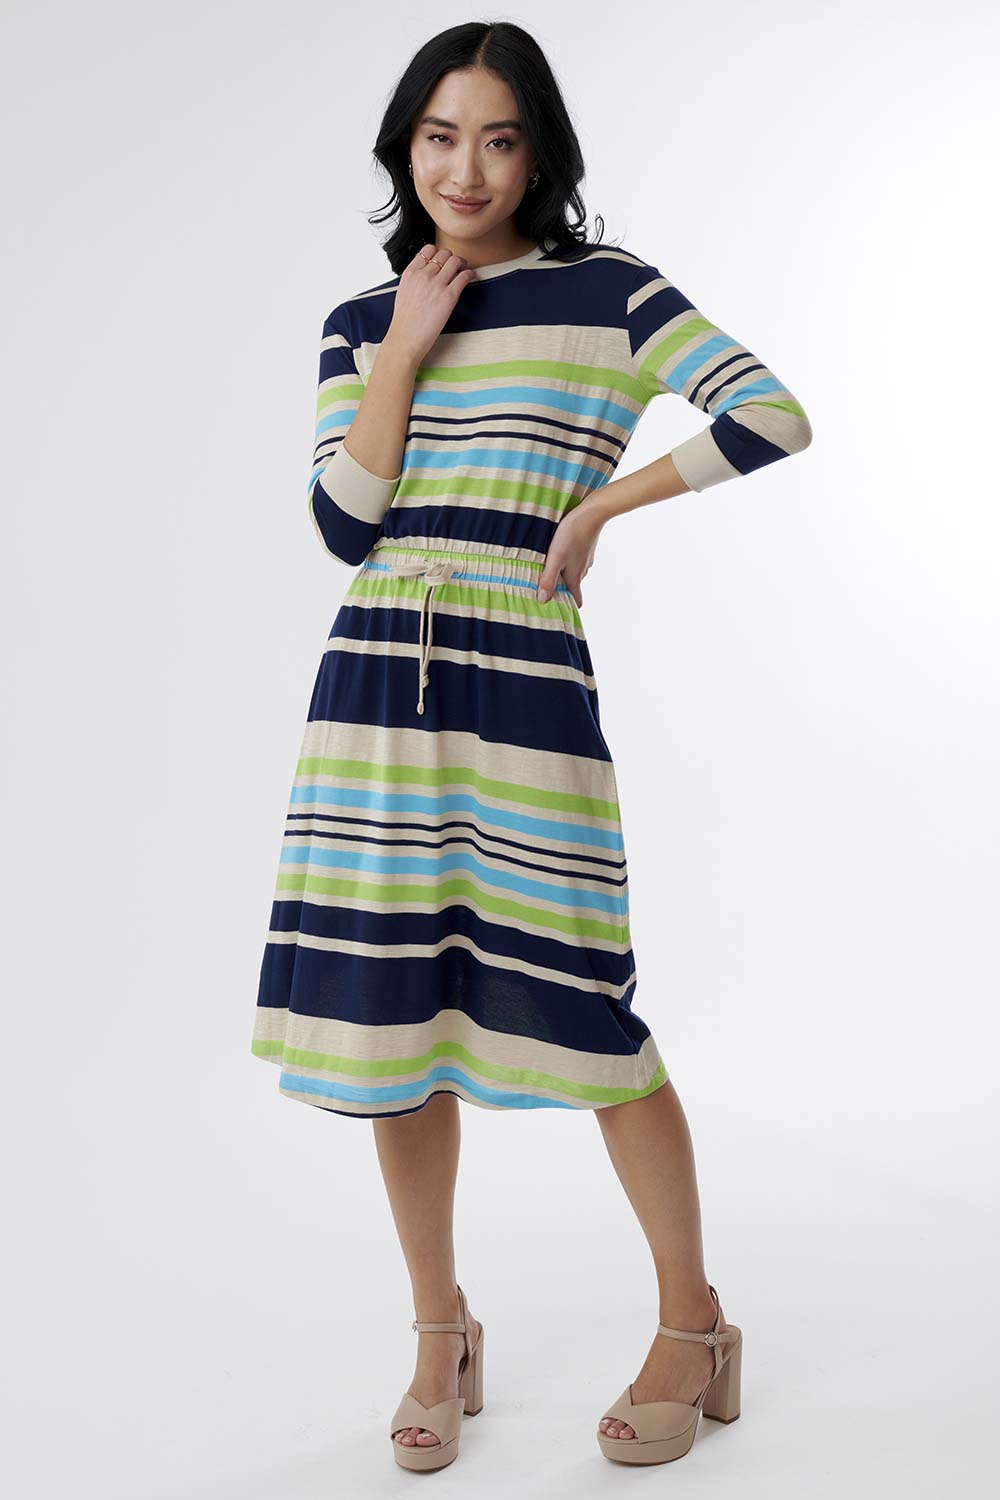 Super-Soft 3/4 Sleeve Dress with Adjustable Drawstring